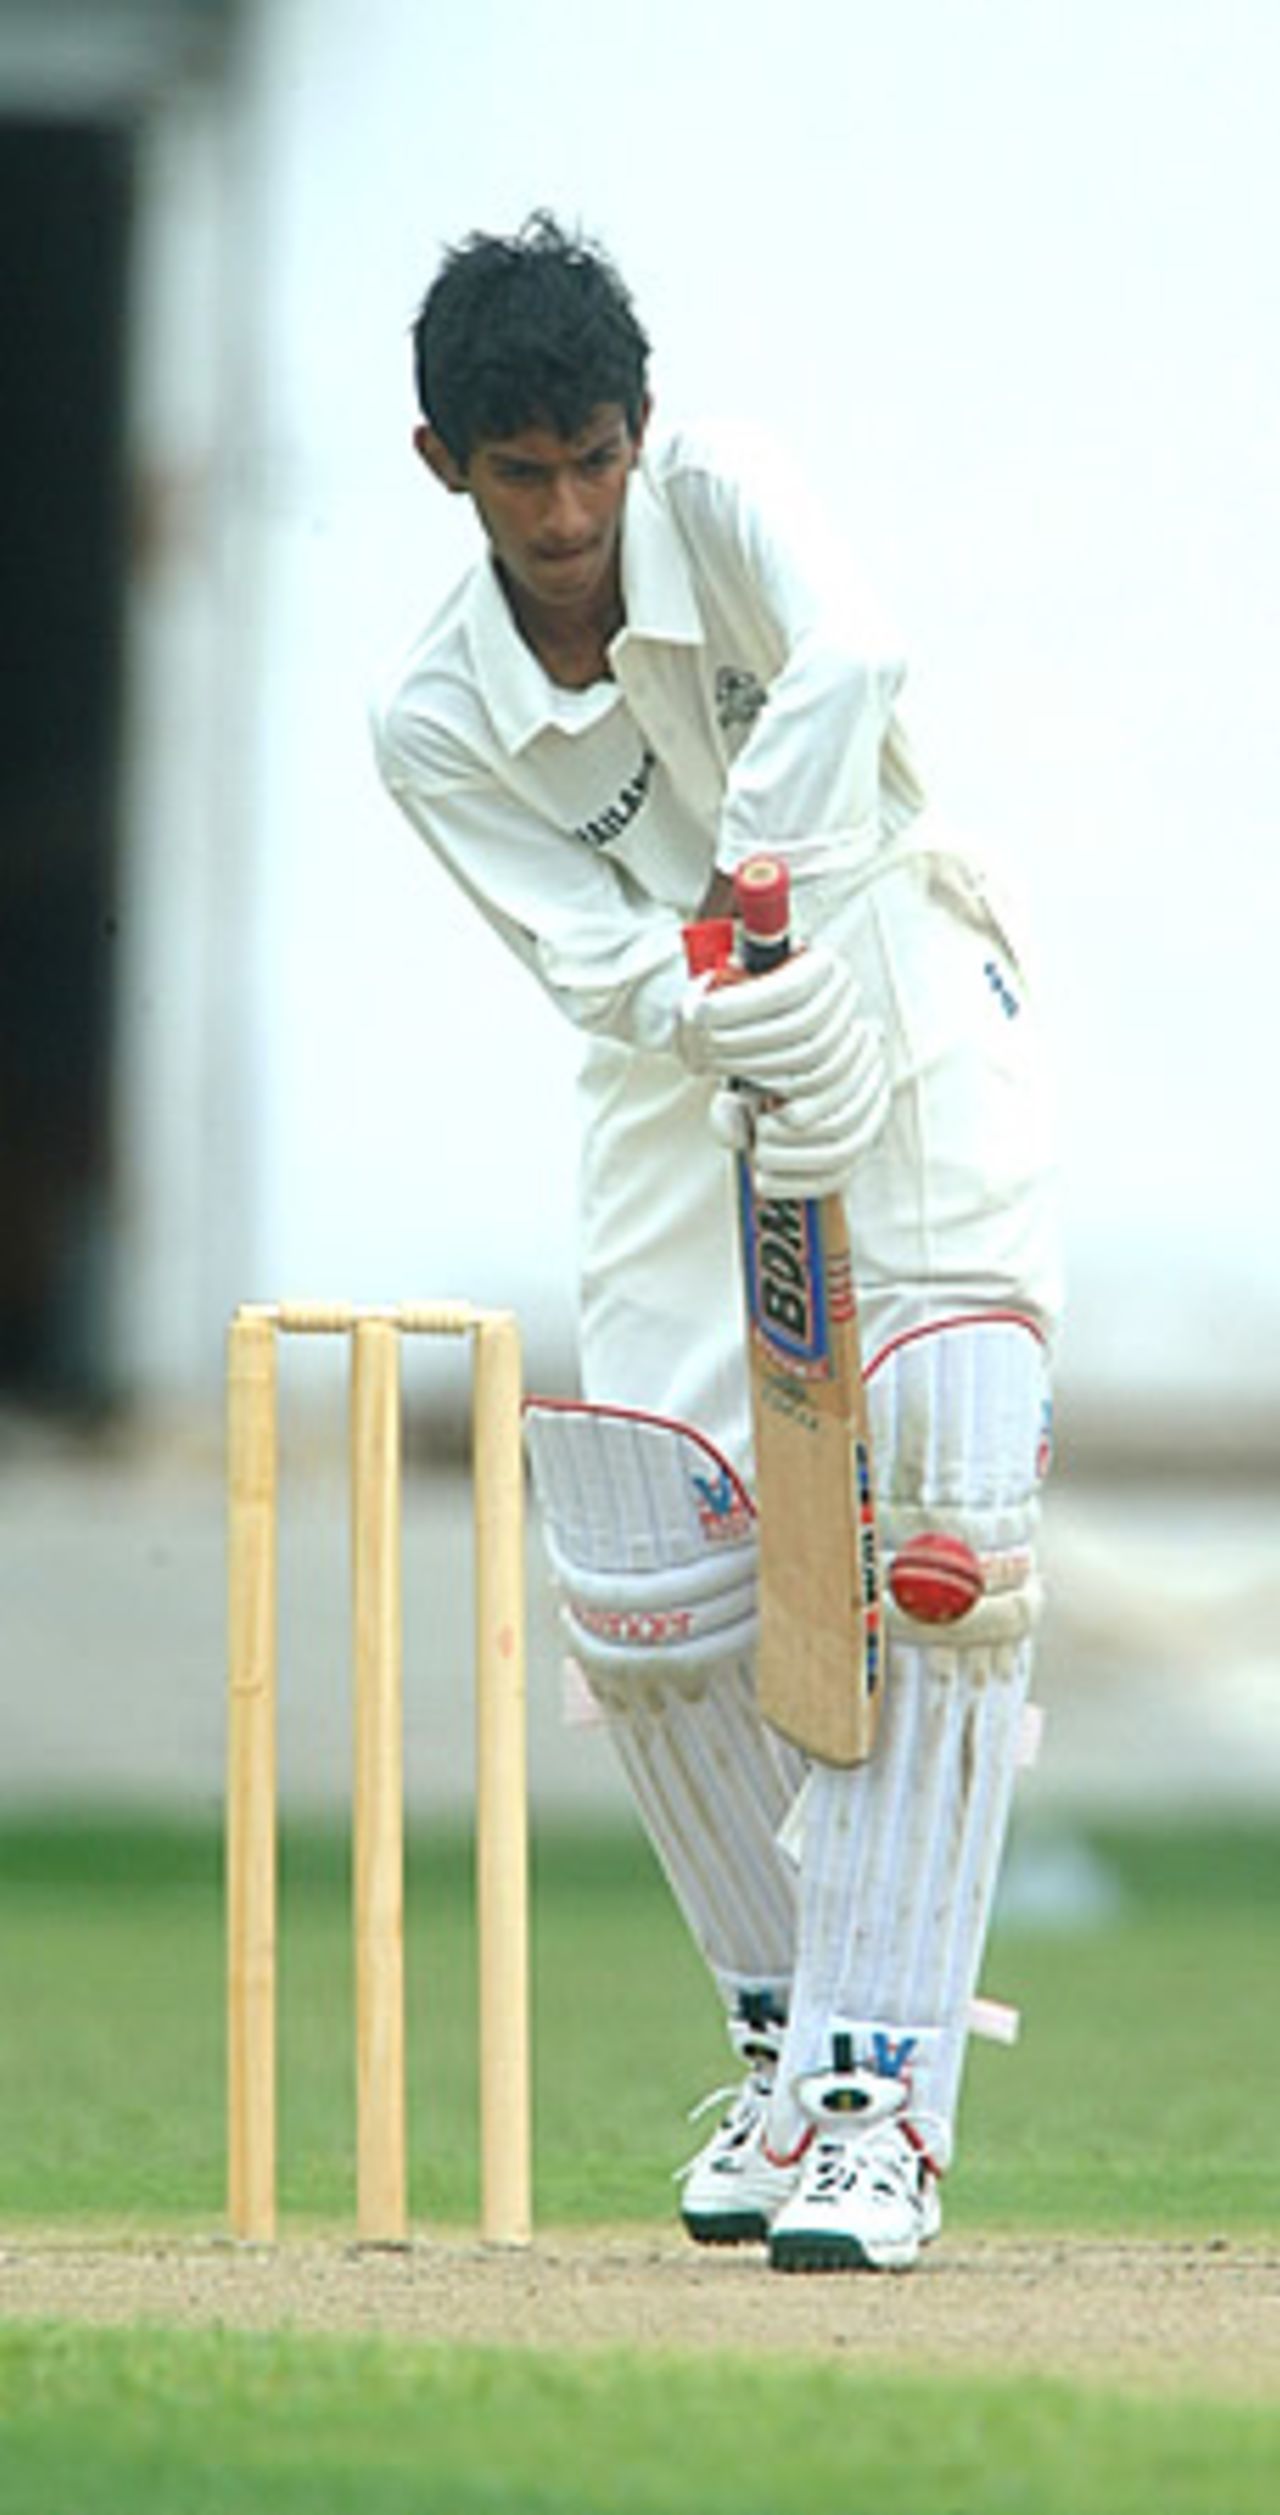 Thai batsman Darshil Shah scored 37 runs, Hong Kong Under-19s v Thailand Under-19s at National Stadium Karachi, Youth Asia Cup 2003, 21 July 2003.